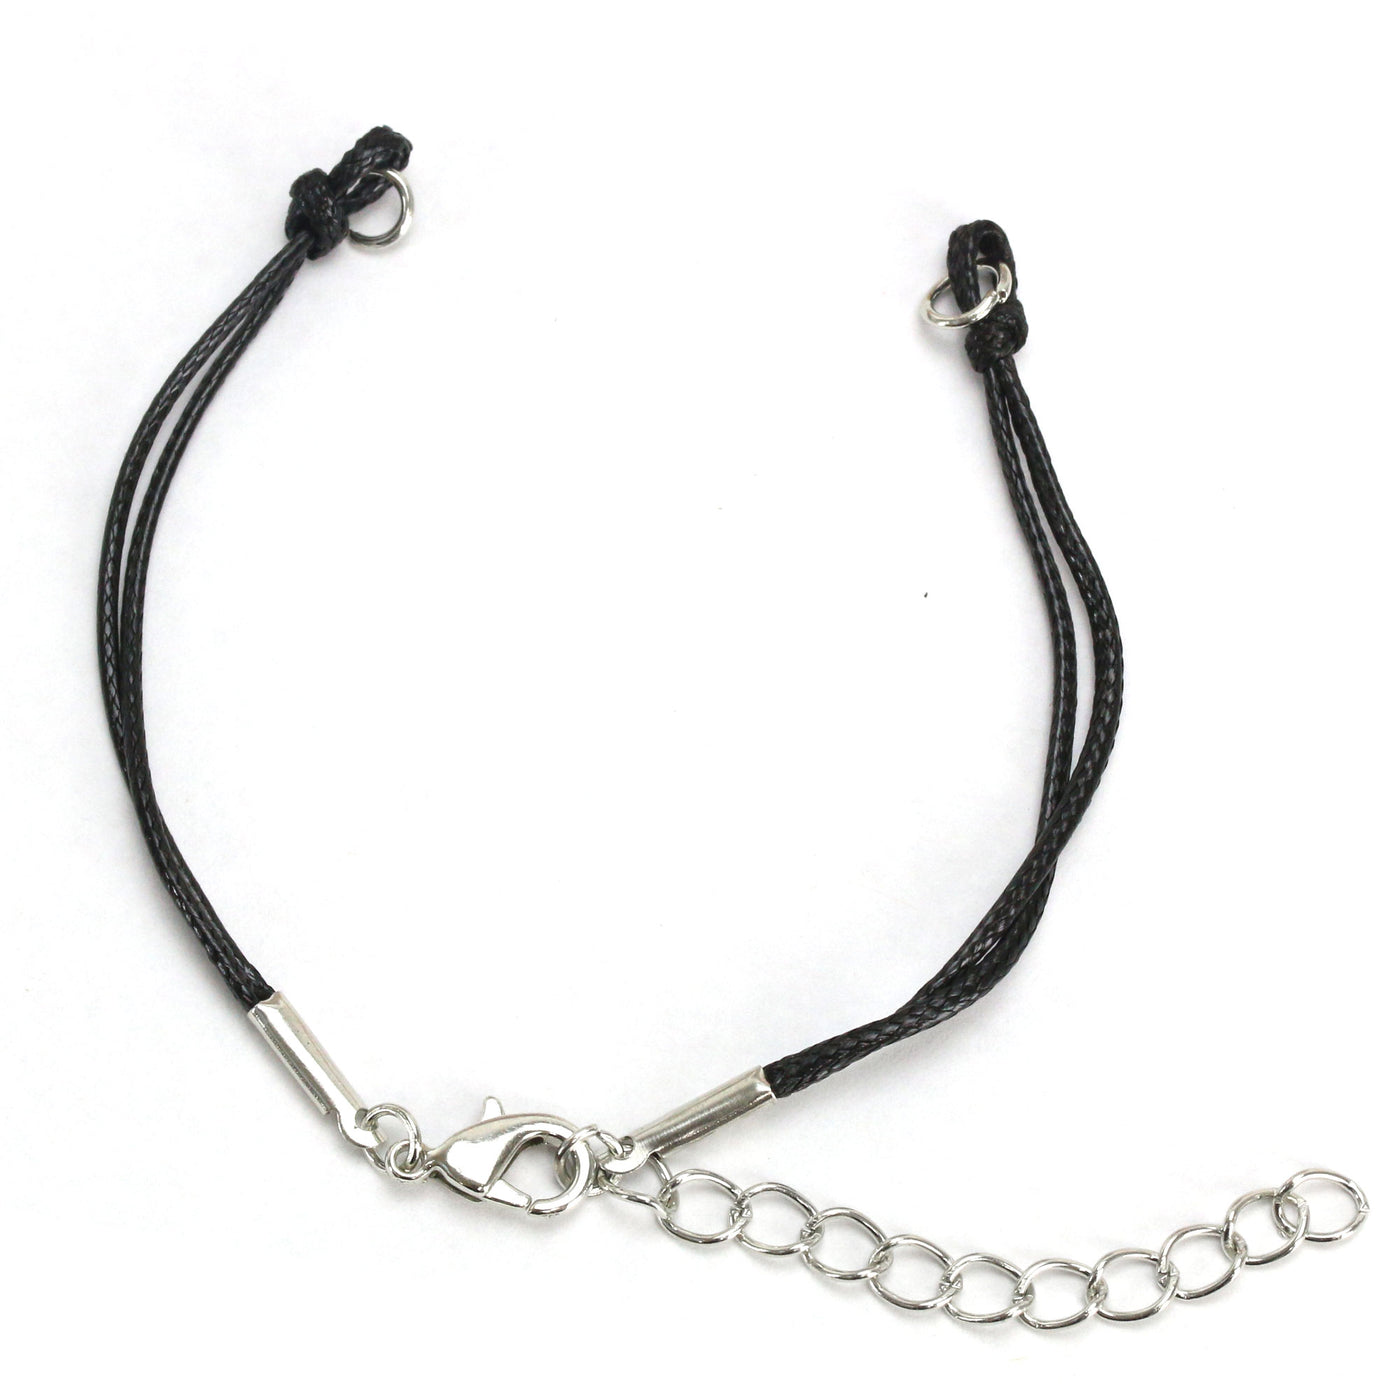  Nylon String for Bracelets, 25 Colors 1125 Yards